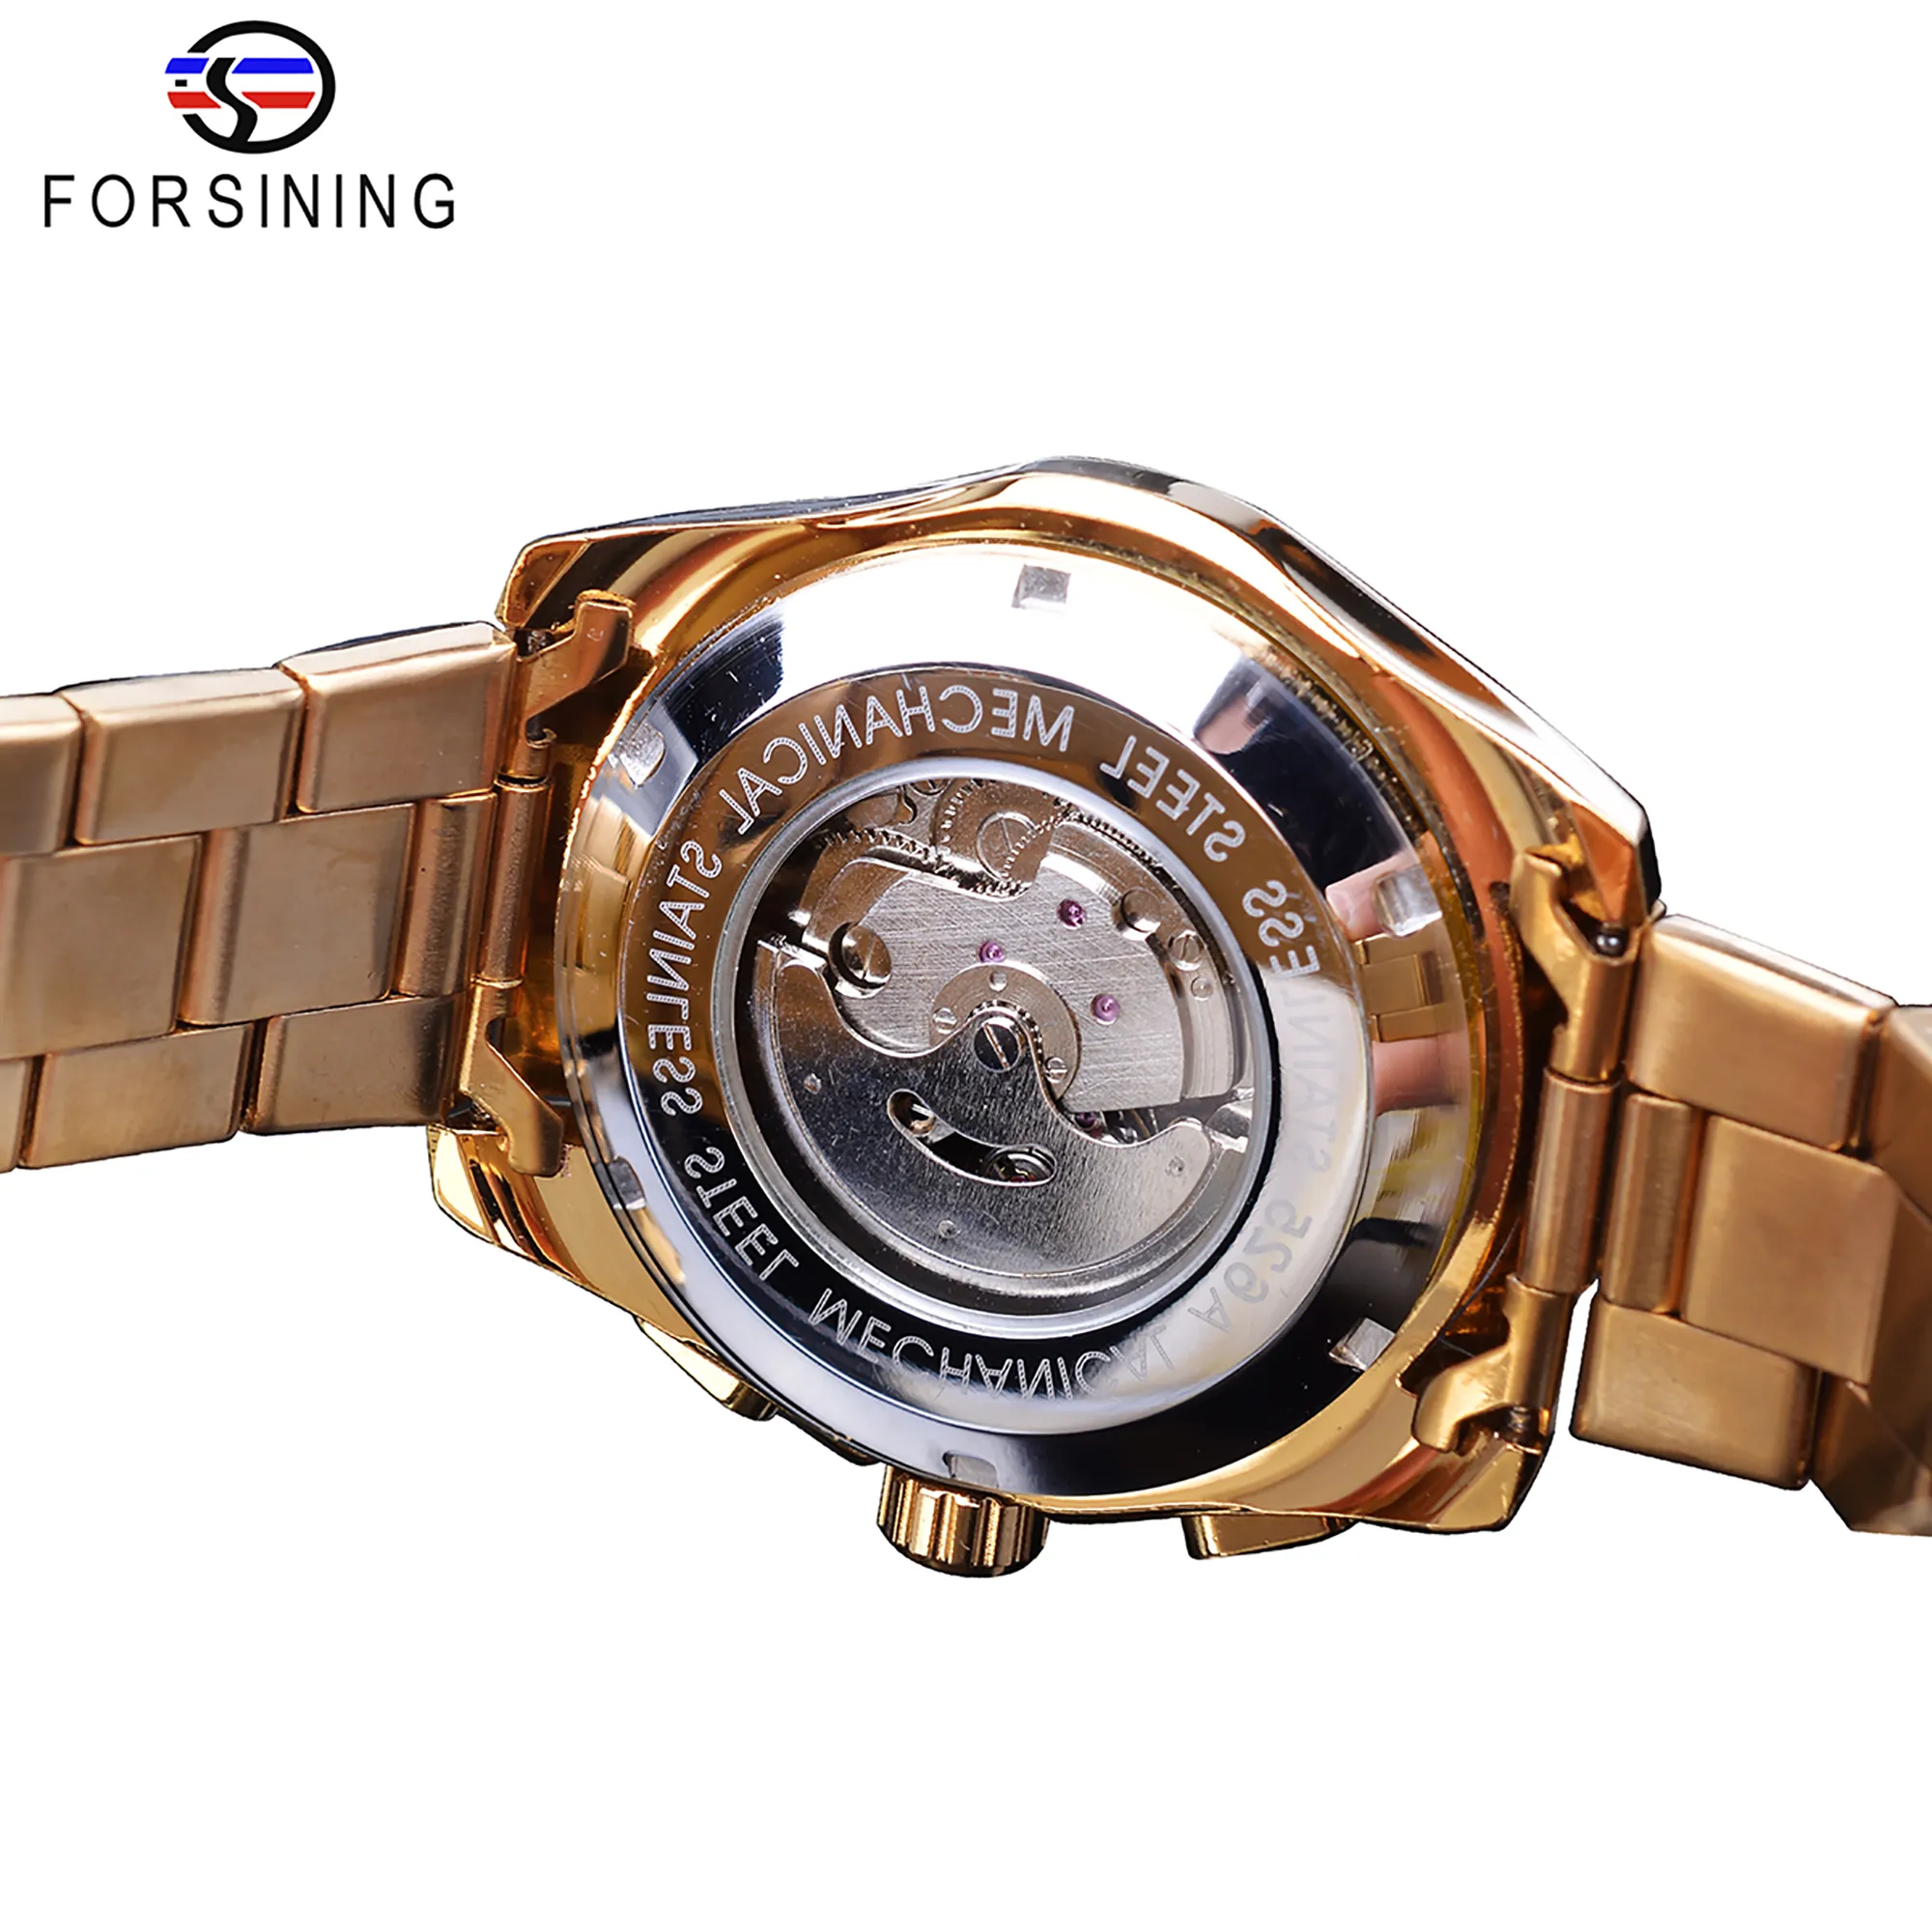 CWP Forsining Golden Men Mechanical Watch Fashion 3 Dial Calendar Stael Business Dżentelmen Automatyczne zegarki Montre Hom291Q